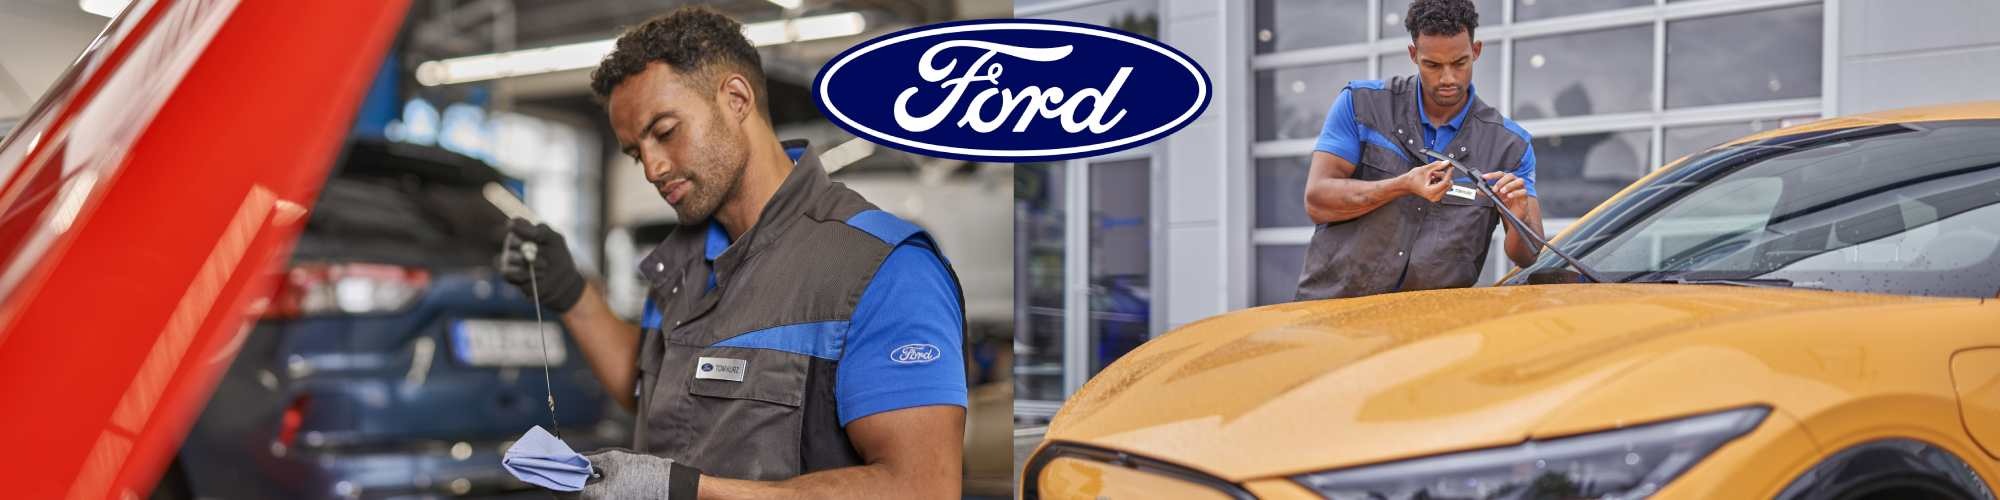 Ford Servicing at Ludham Garage, Great Yarmouth